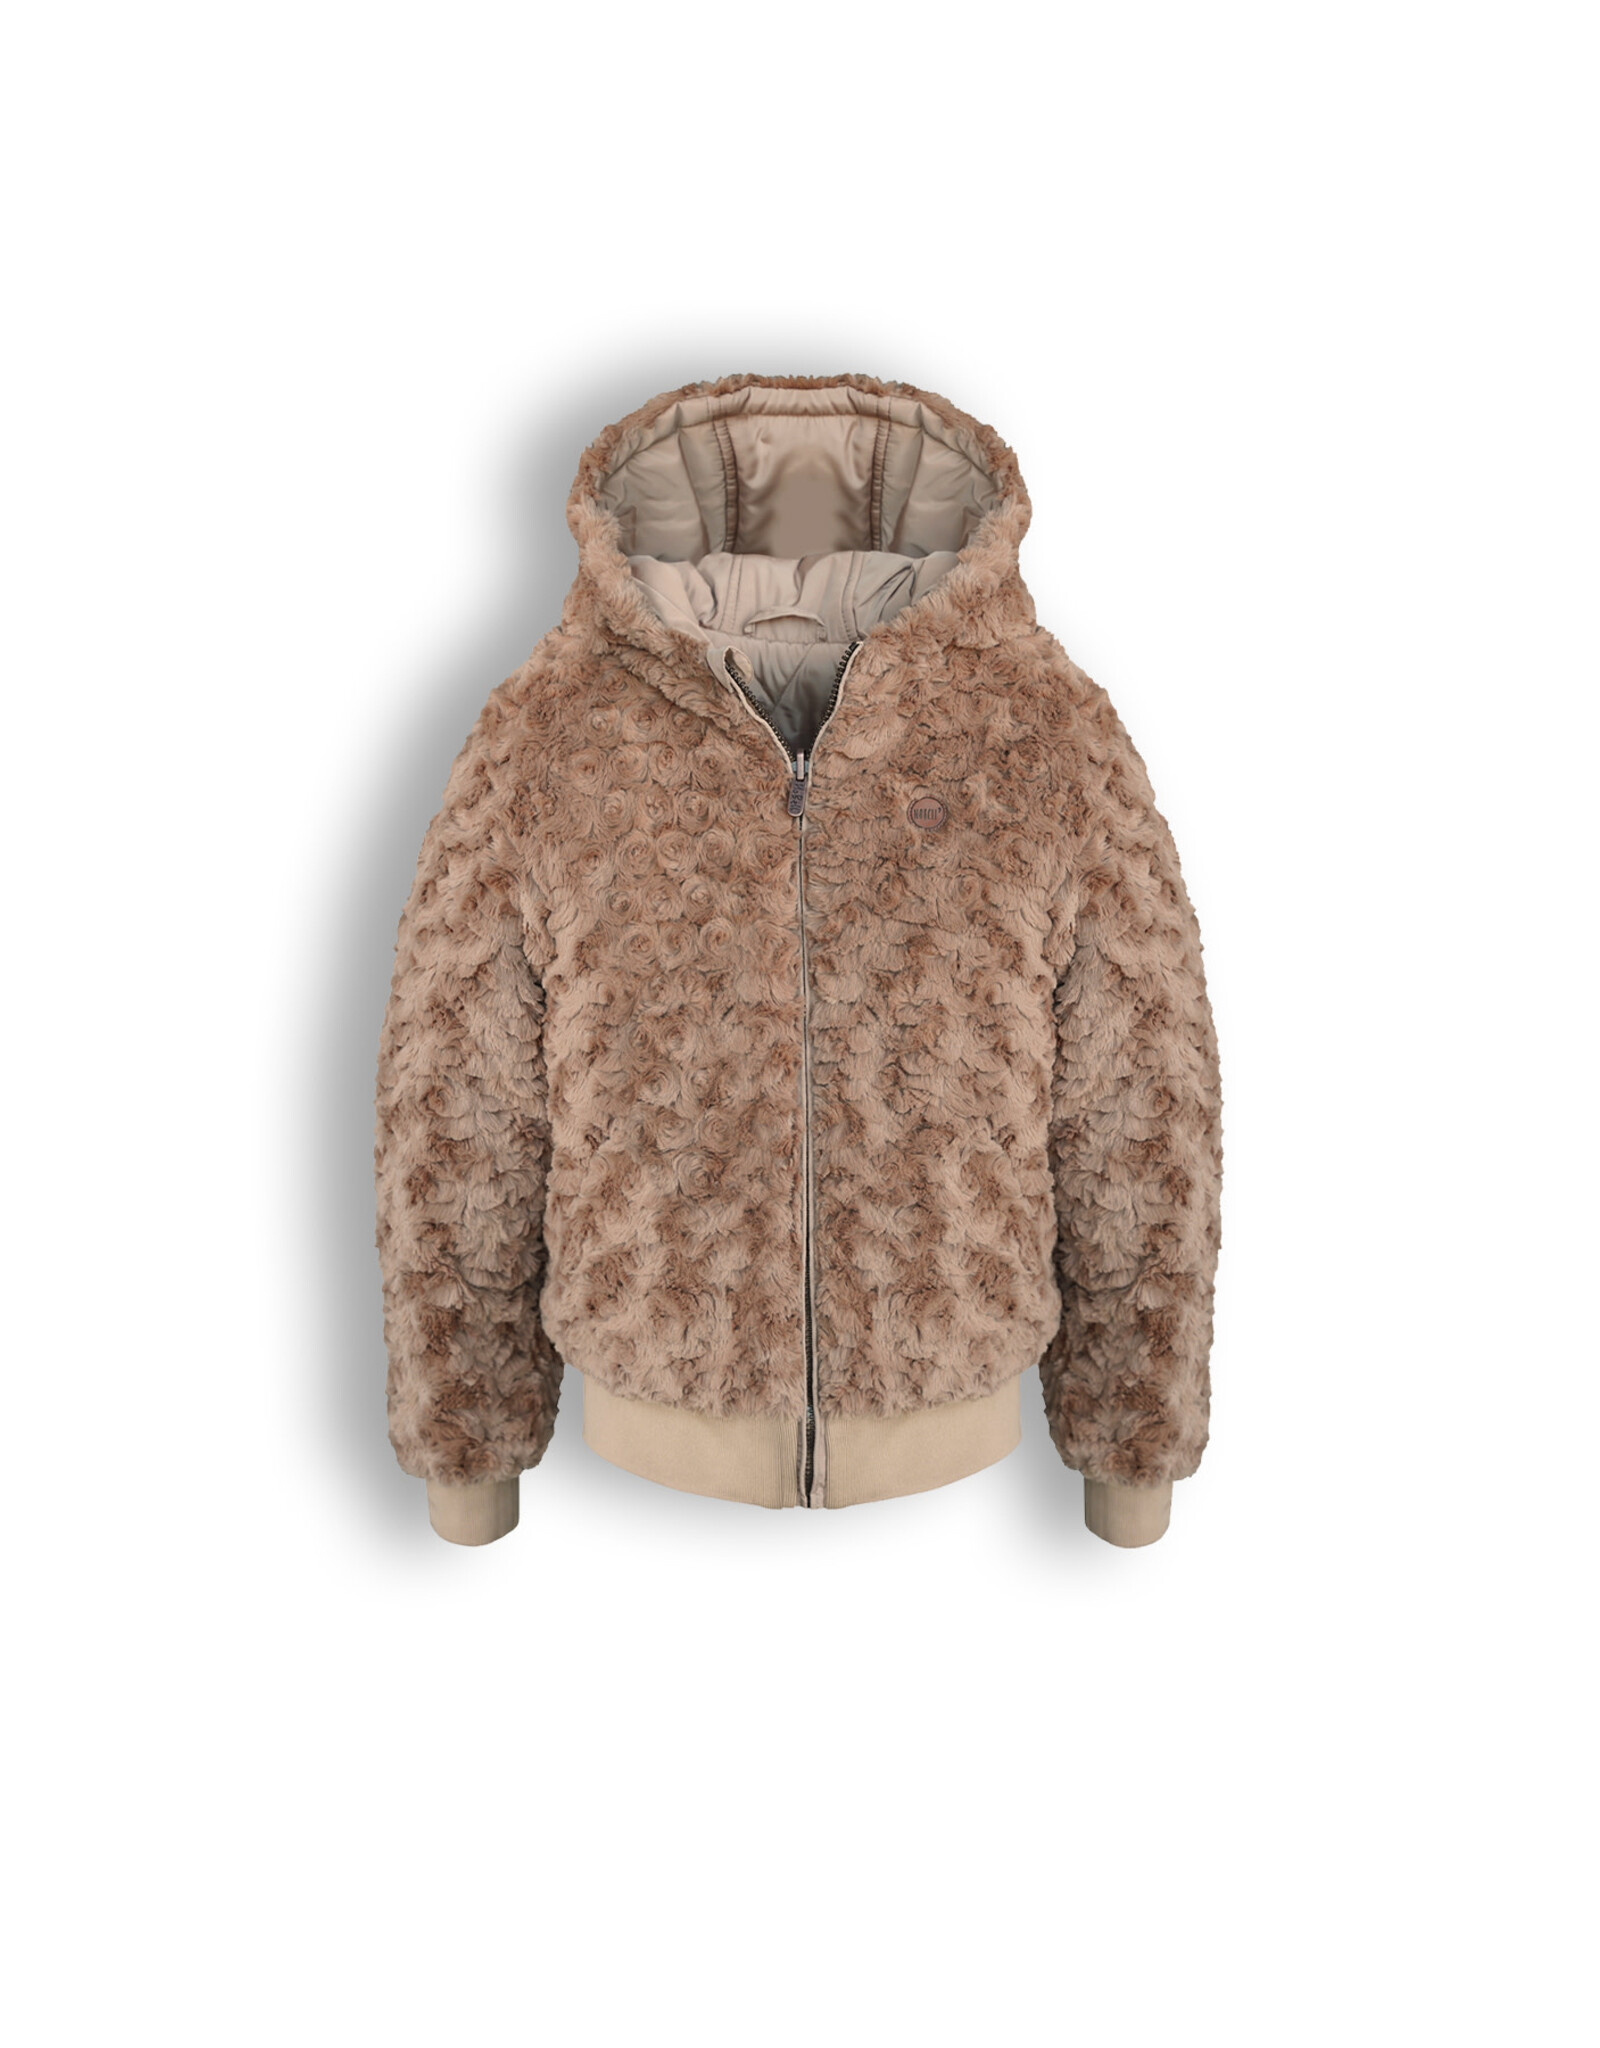 Nobell NoBell' Bye Revirseble hooded jacket with fur Beige Sand